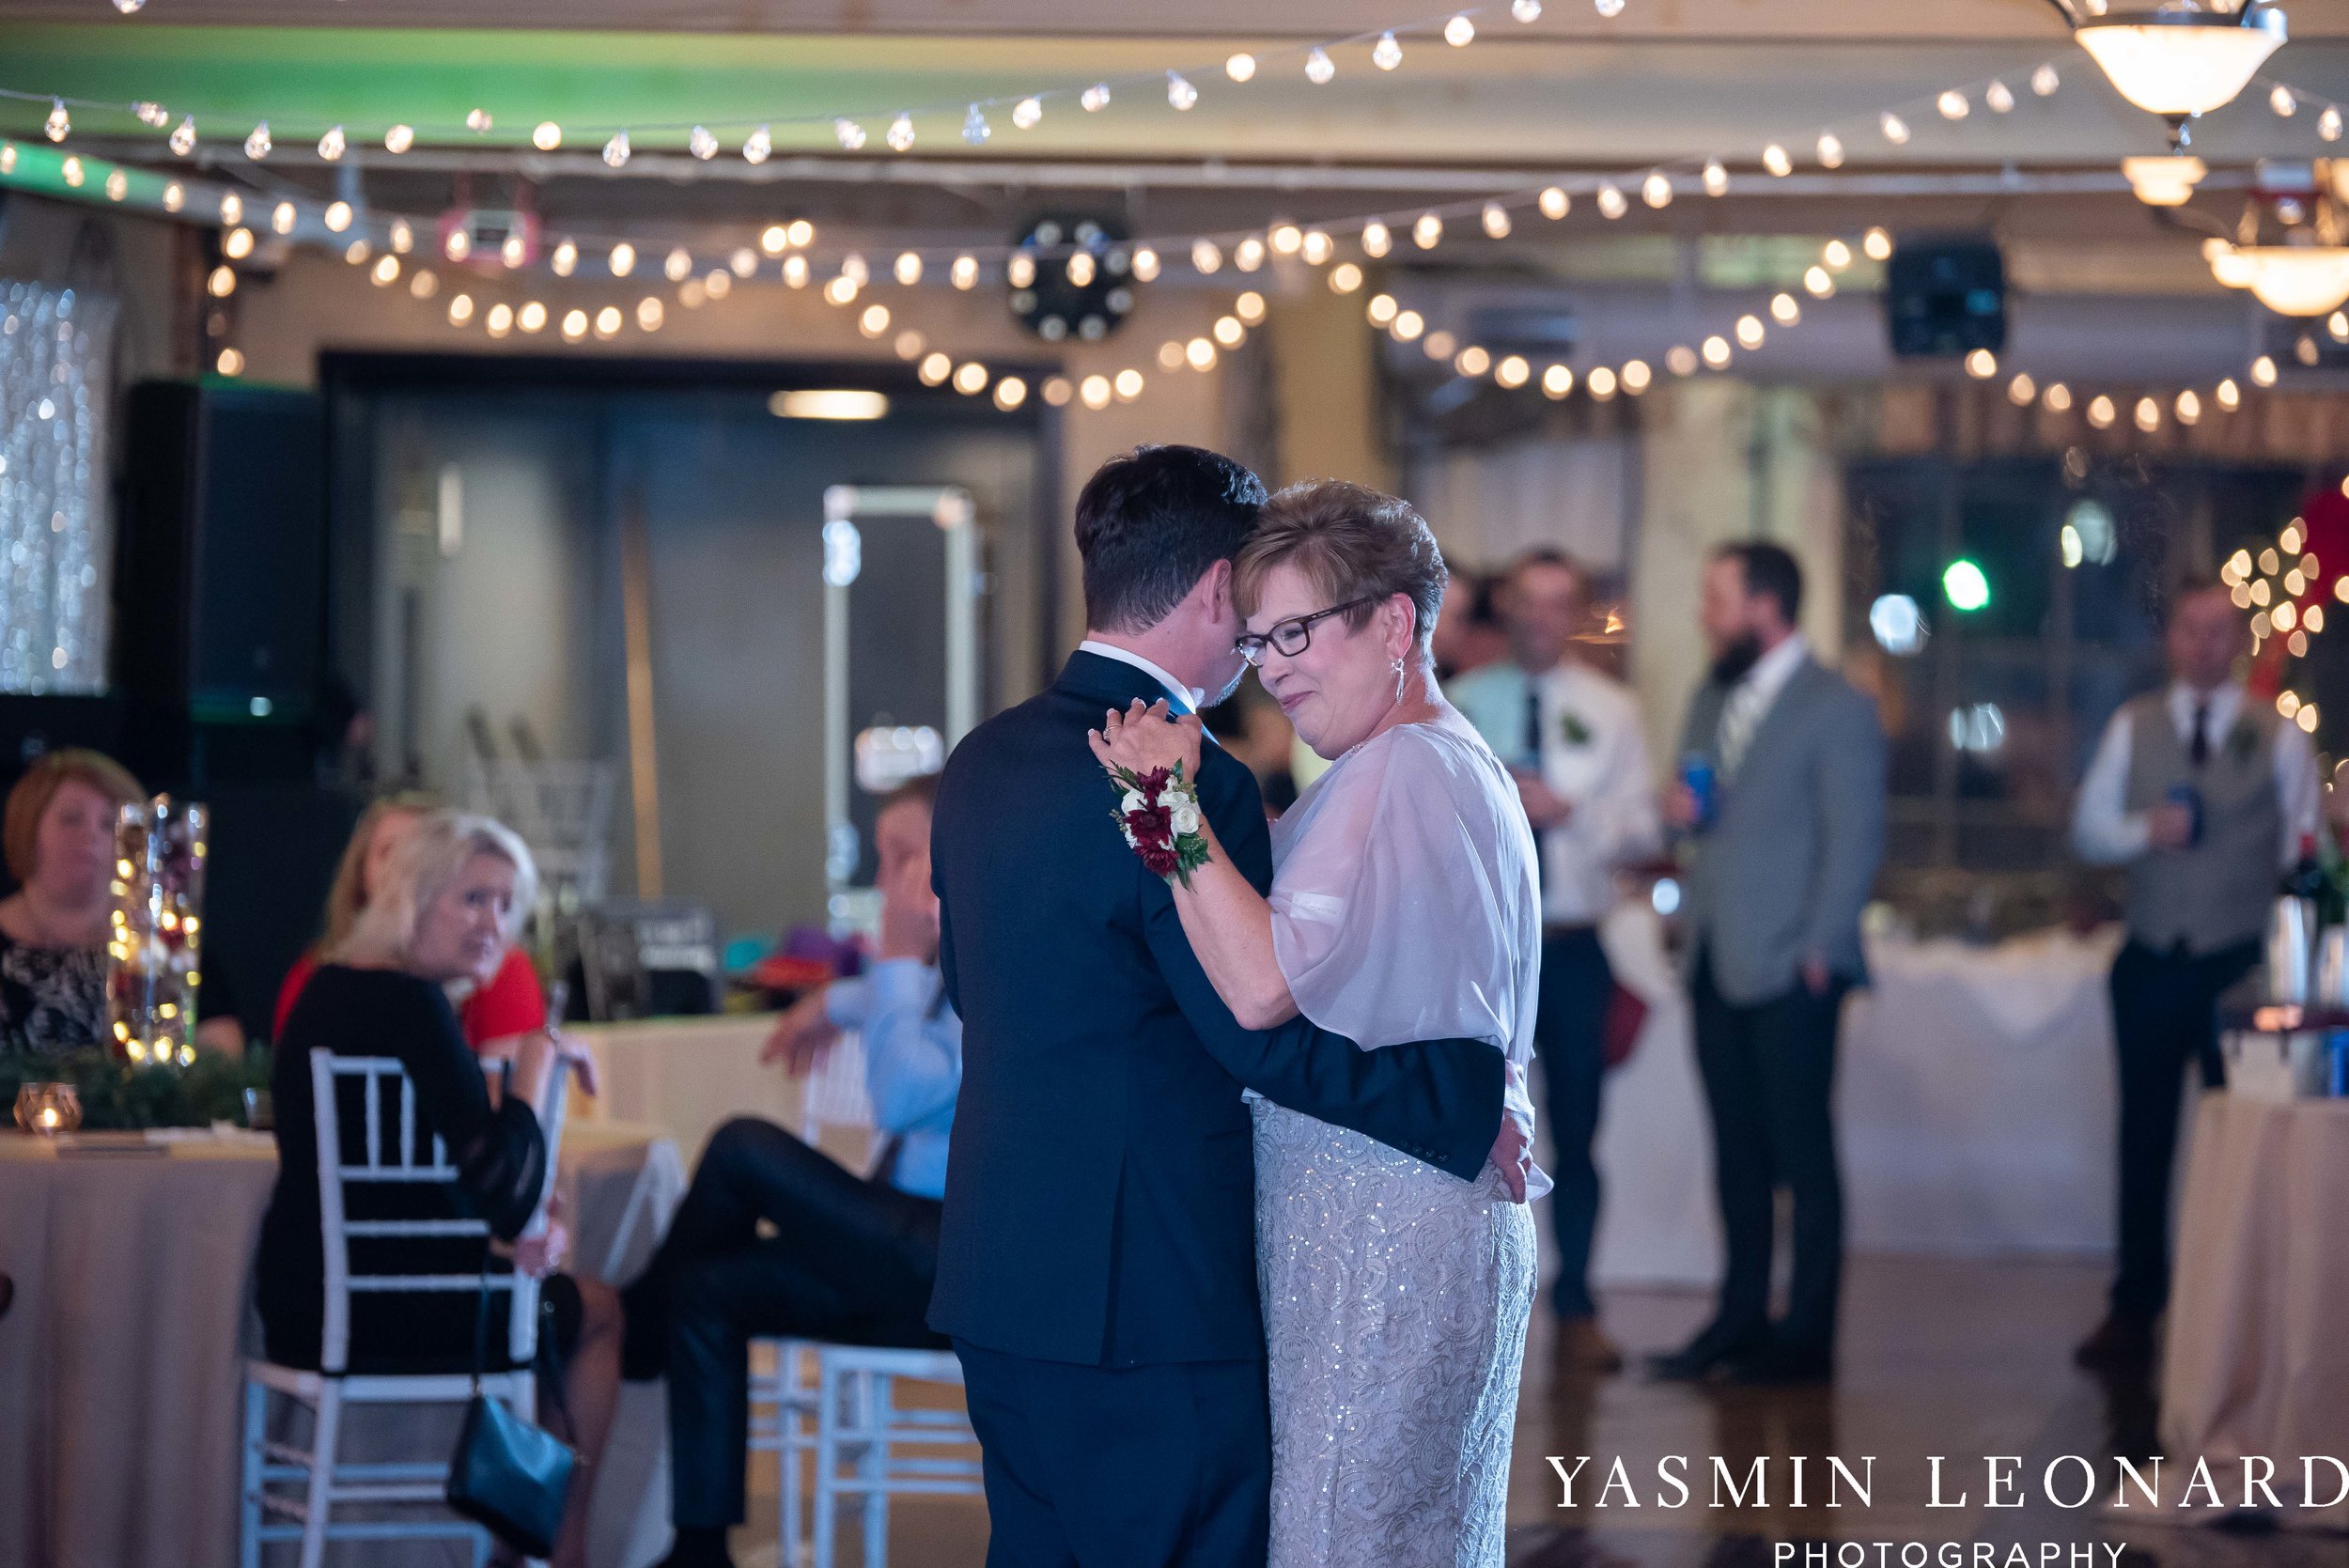 Rebekah and Matt - 105 Worth Event Centre - Yasmin Leonard Photography - Asheboro Wedding - NC Wedding - High Point Weddings - Triad Weddings - Winter Wedding-53.jpg